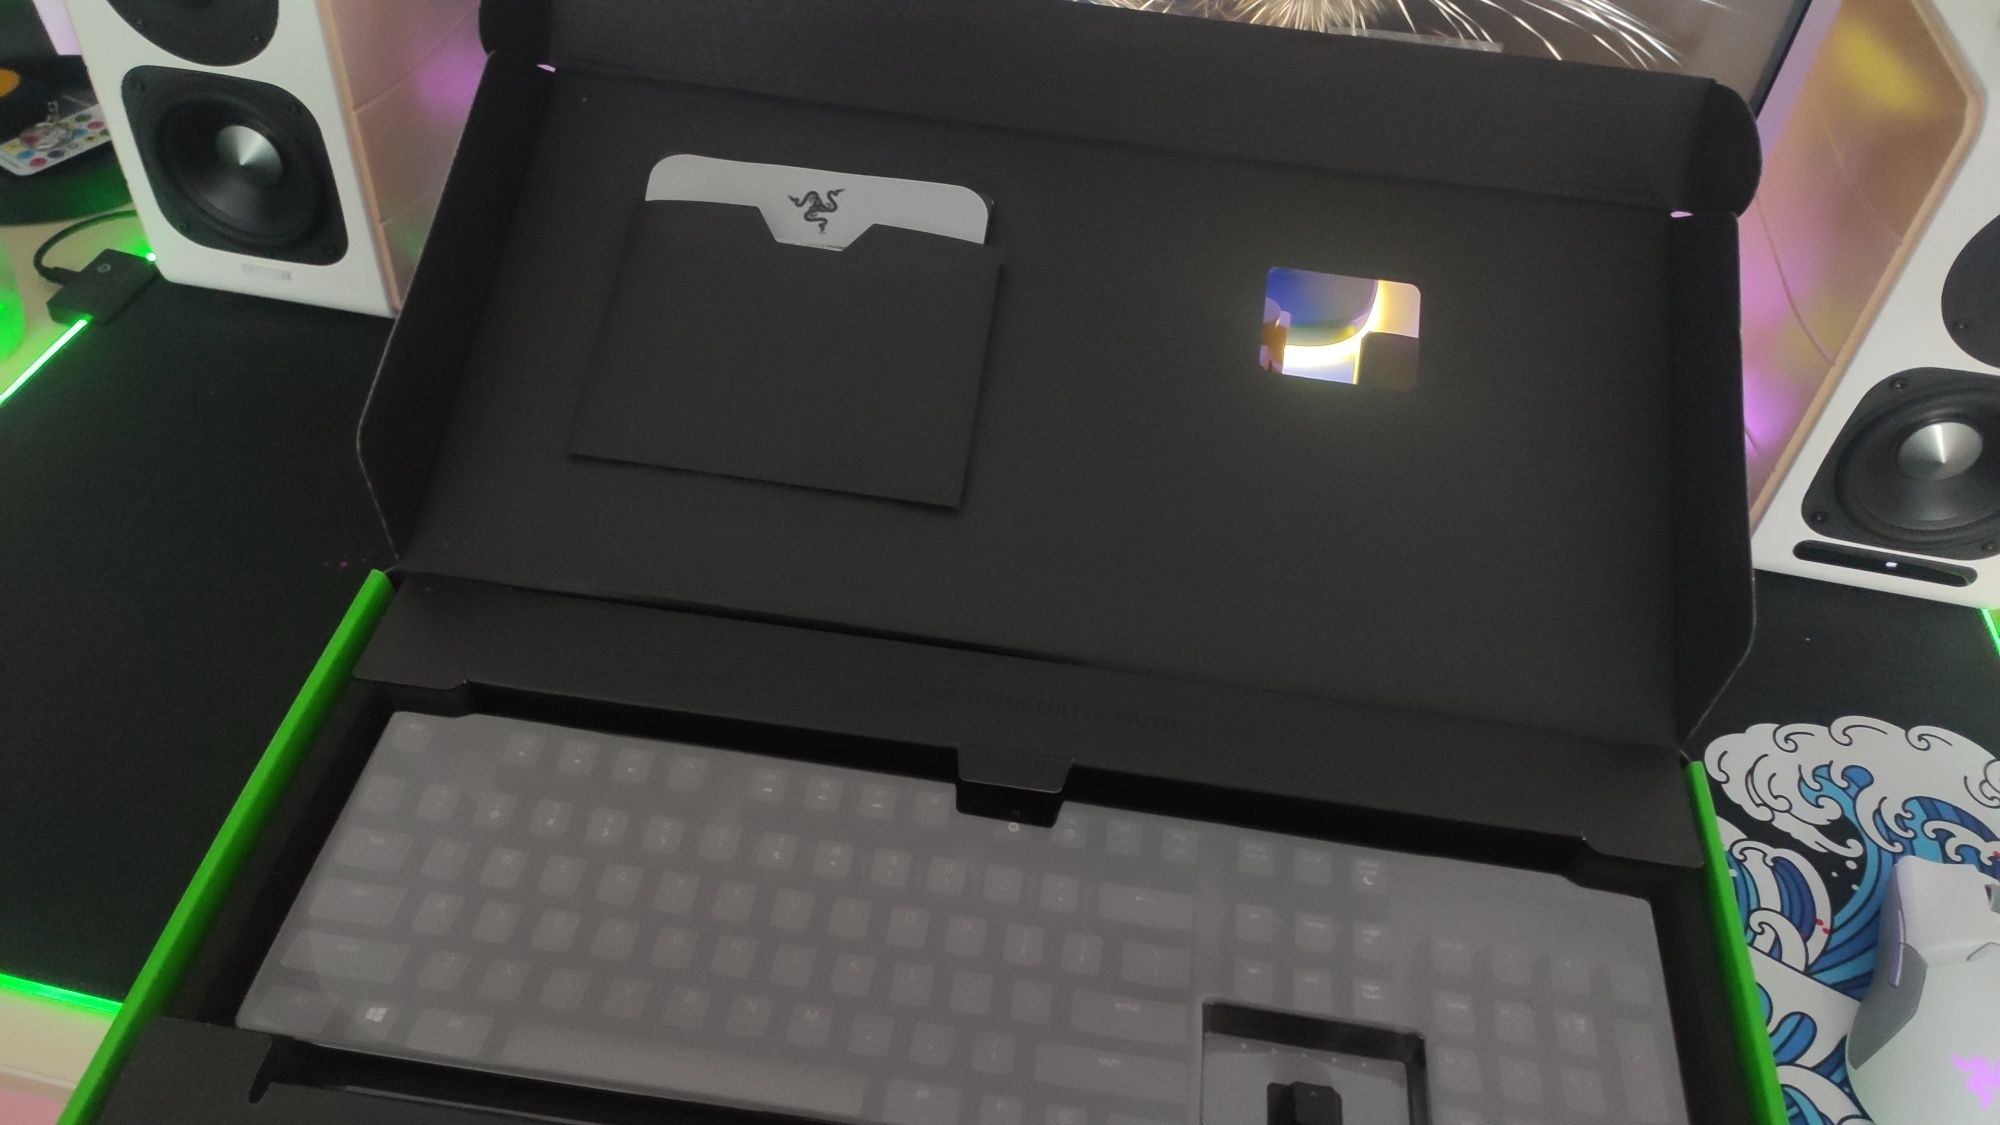 Tastatura Gaming mecanica RAZER Huntsman, Opto Switch, USB, Layout US